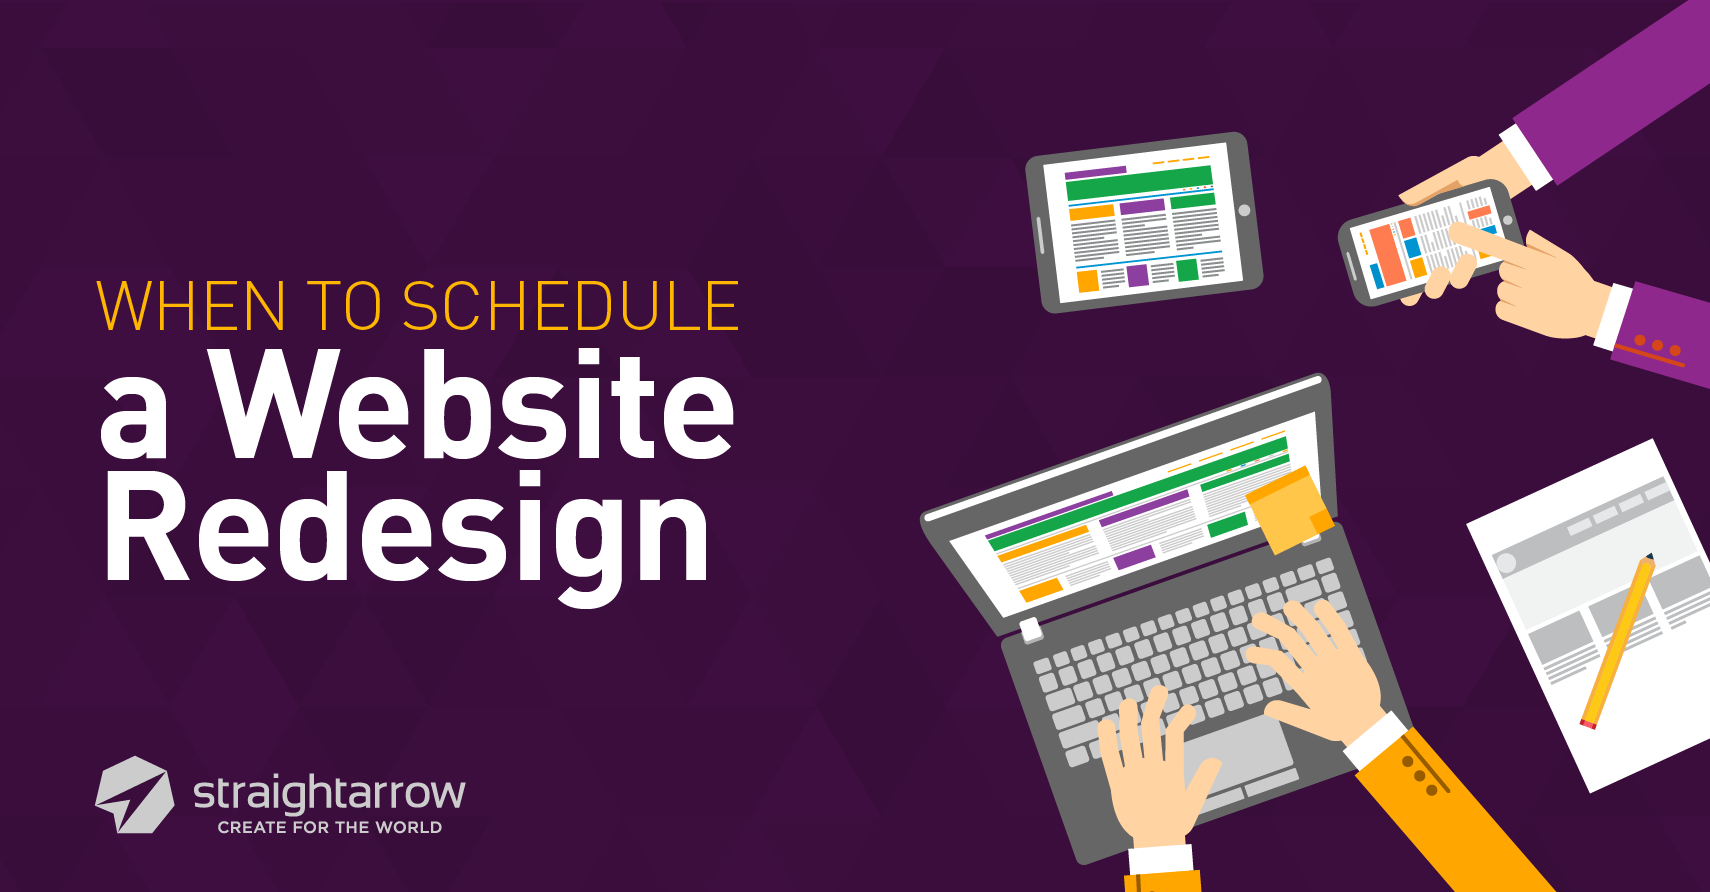 When to Schedule a Website Redesign